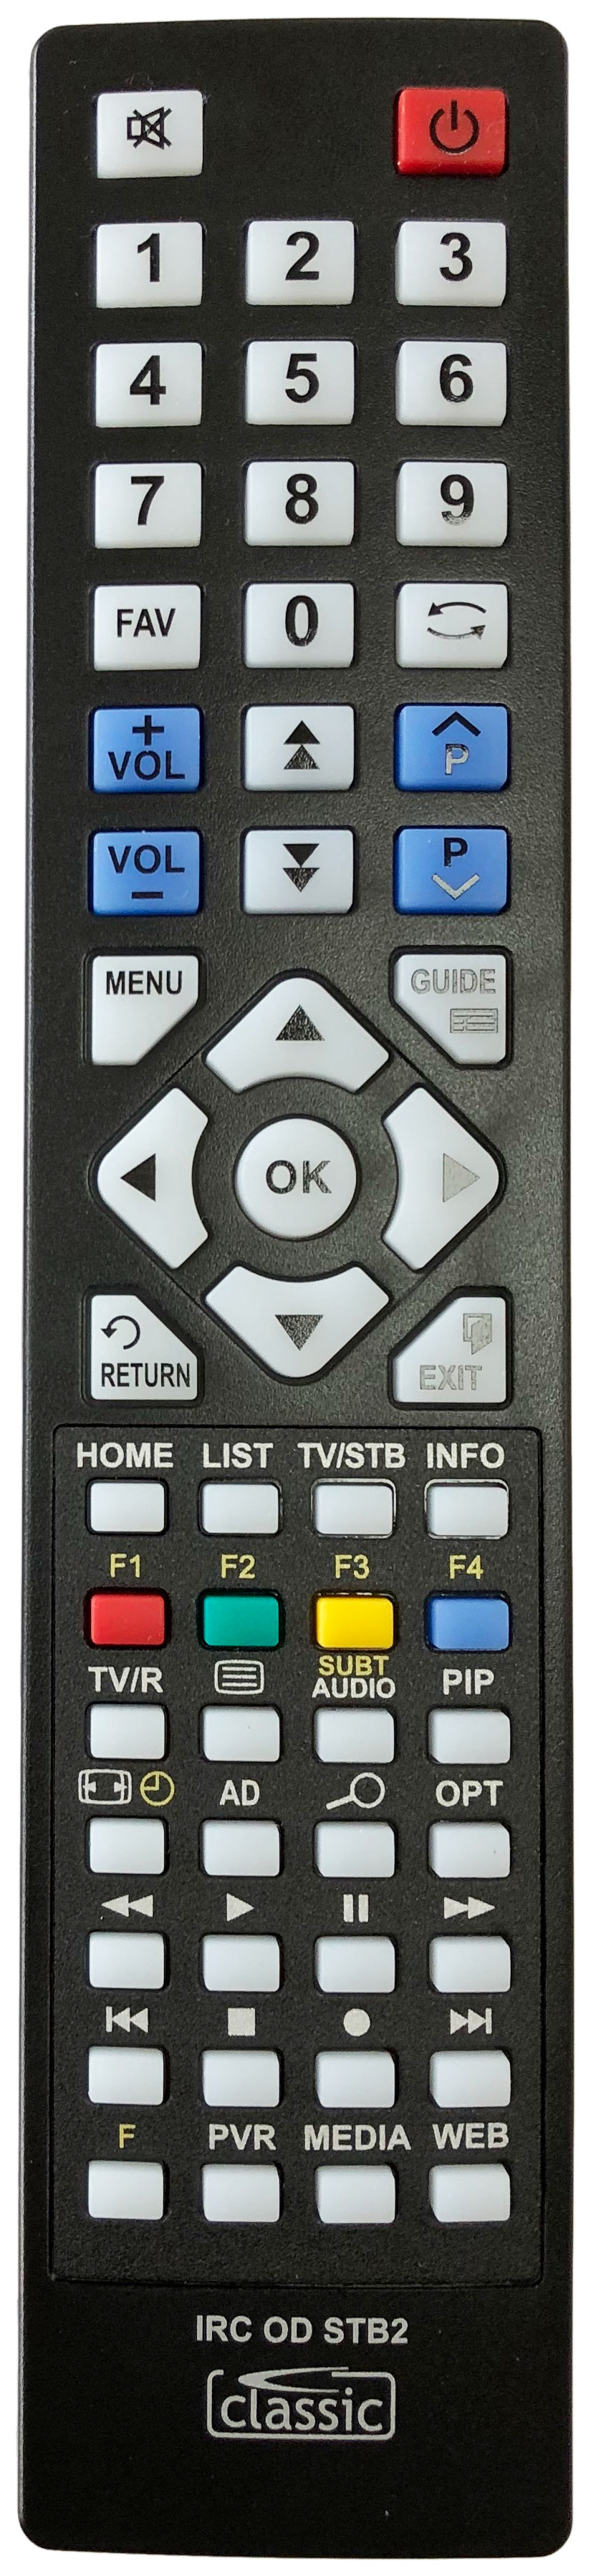 HUMAX HDR-2000T Remote Control Alternative